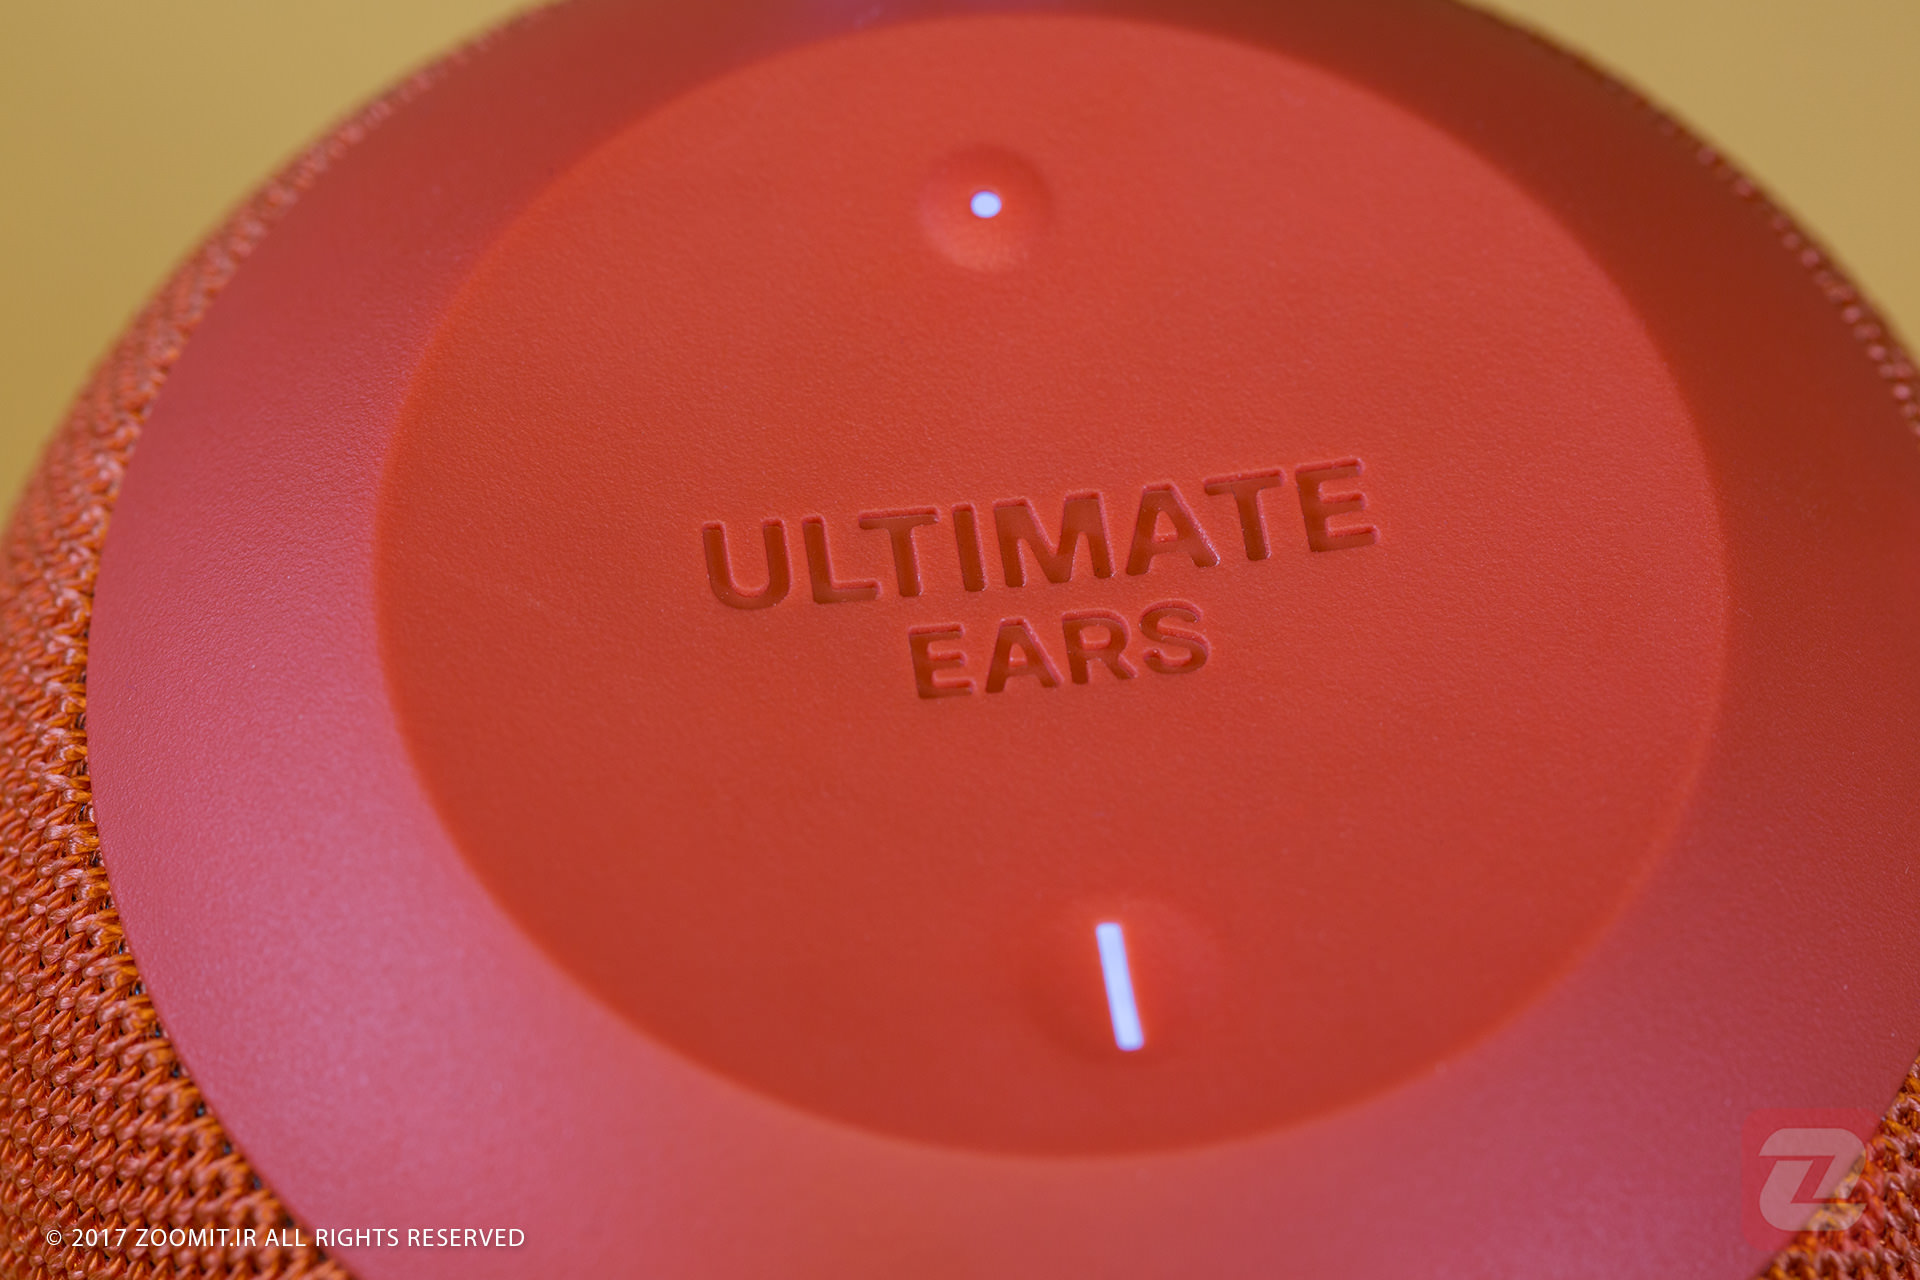 آلتیمیت ایرز واندربوم / Ultimate ears Wonderboom